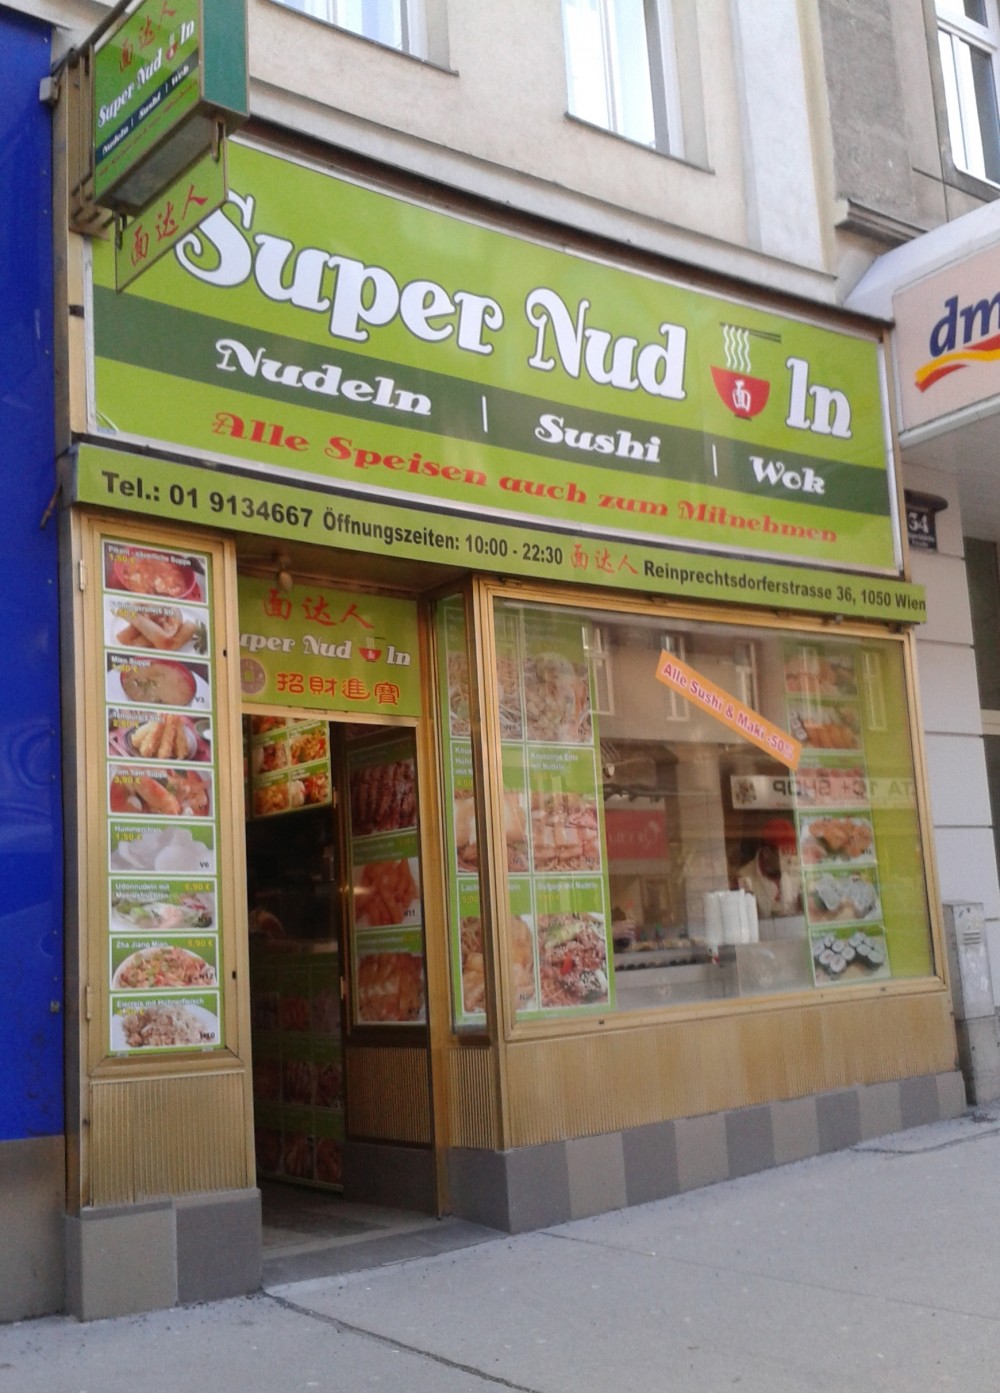 Asia-Restaurant Super Nudeln - Lokalaußenansicht - Asia-Restaurant Super Nudeln - Wien